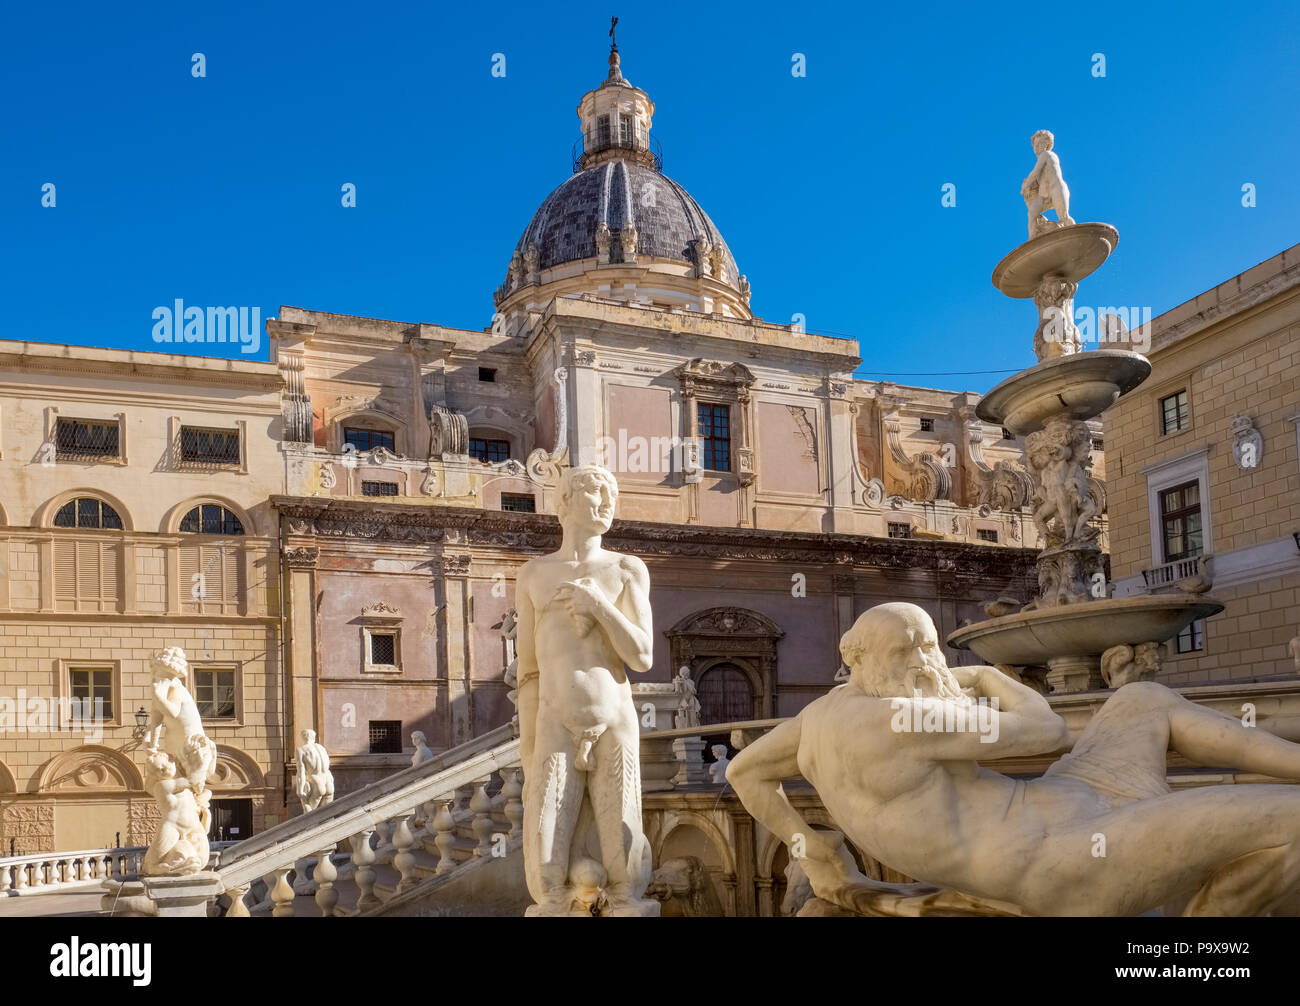 La Fontana Pretoria, Praetorian Fountain, en Piazza Pretoria en Palermo, Sicilia, Italia, Europa Foto de stock